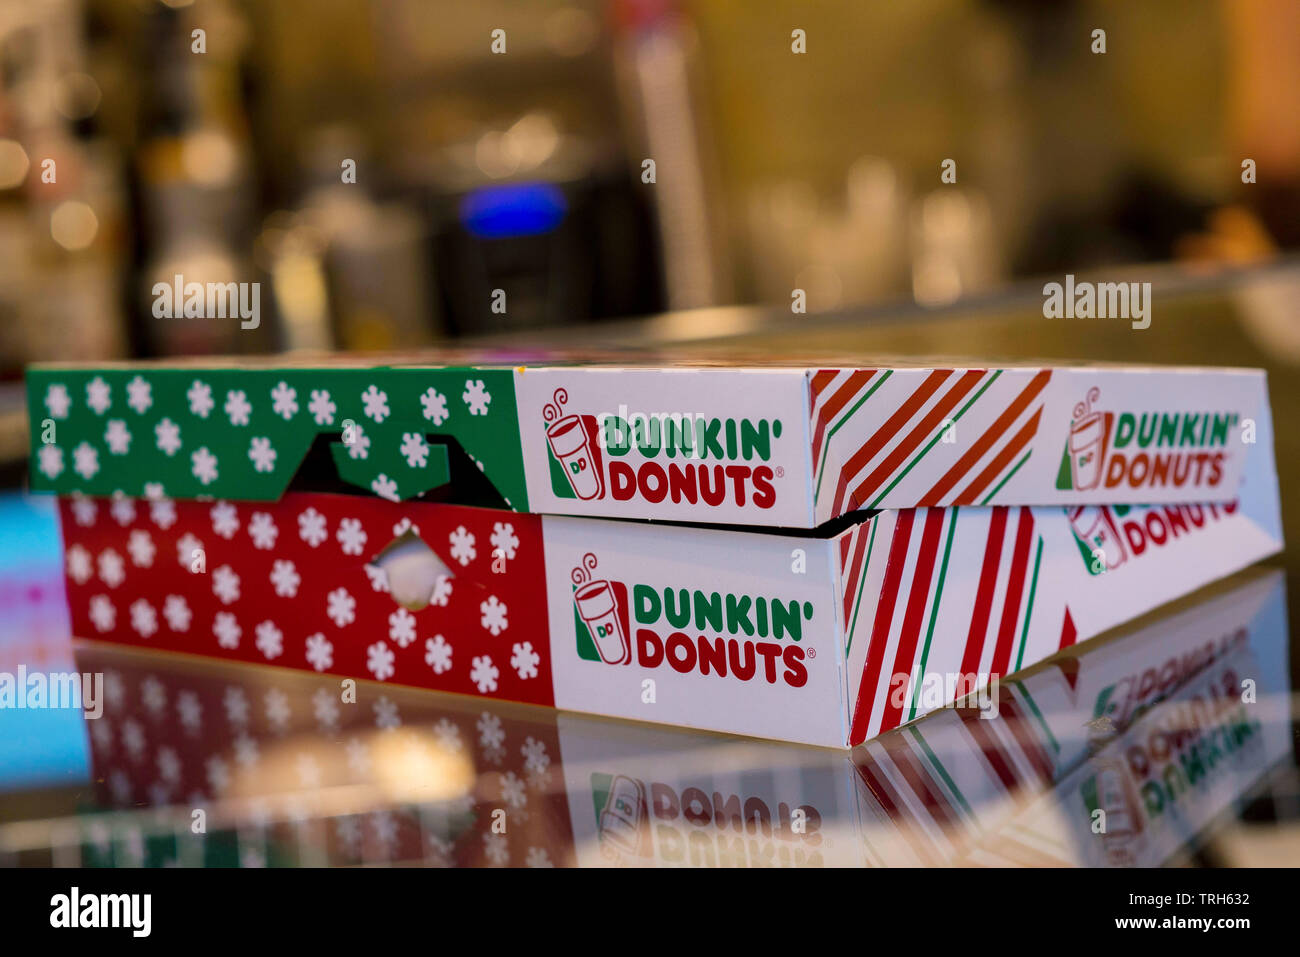 Dunkin’ Donuts. Stock Photo